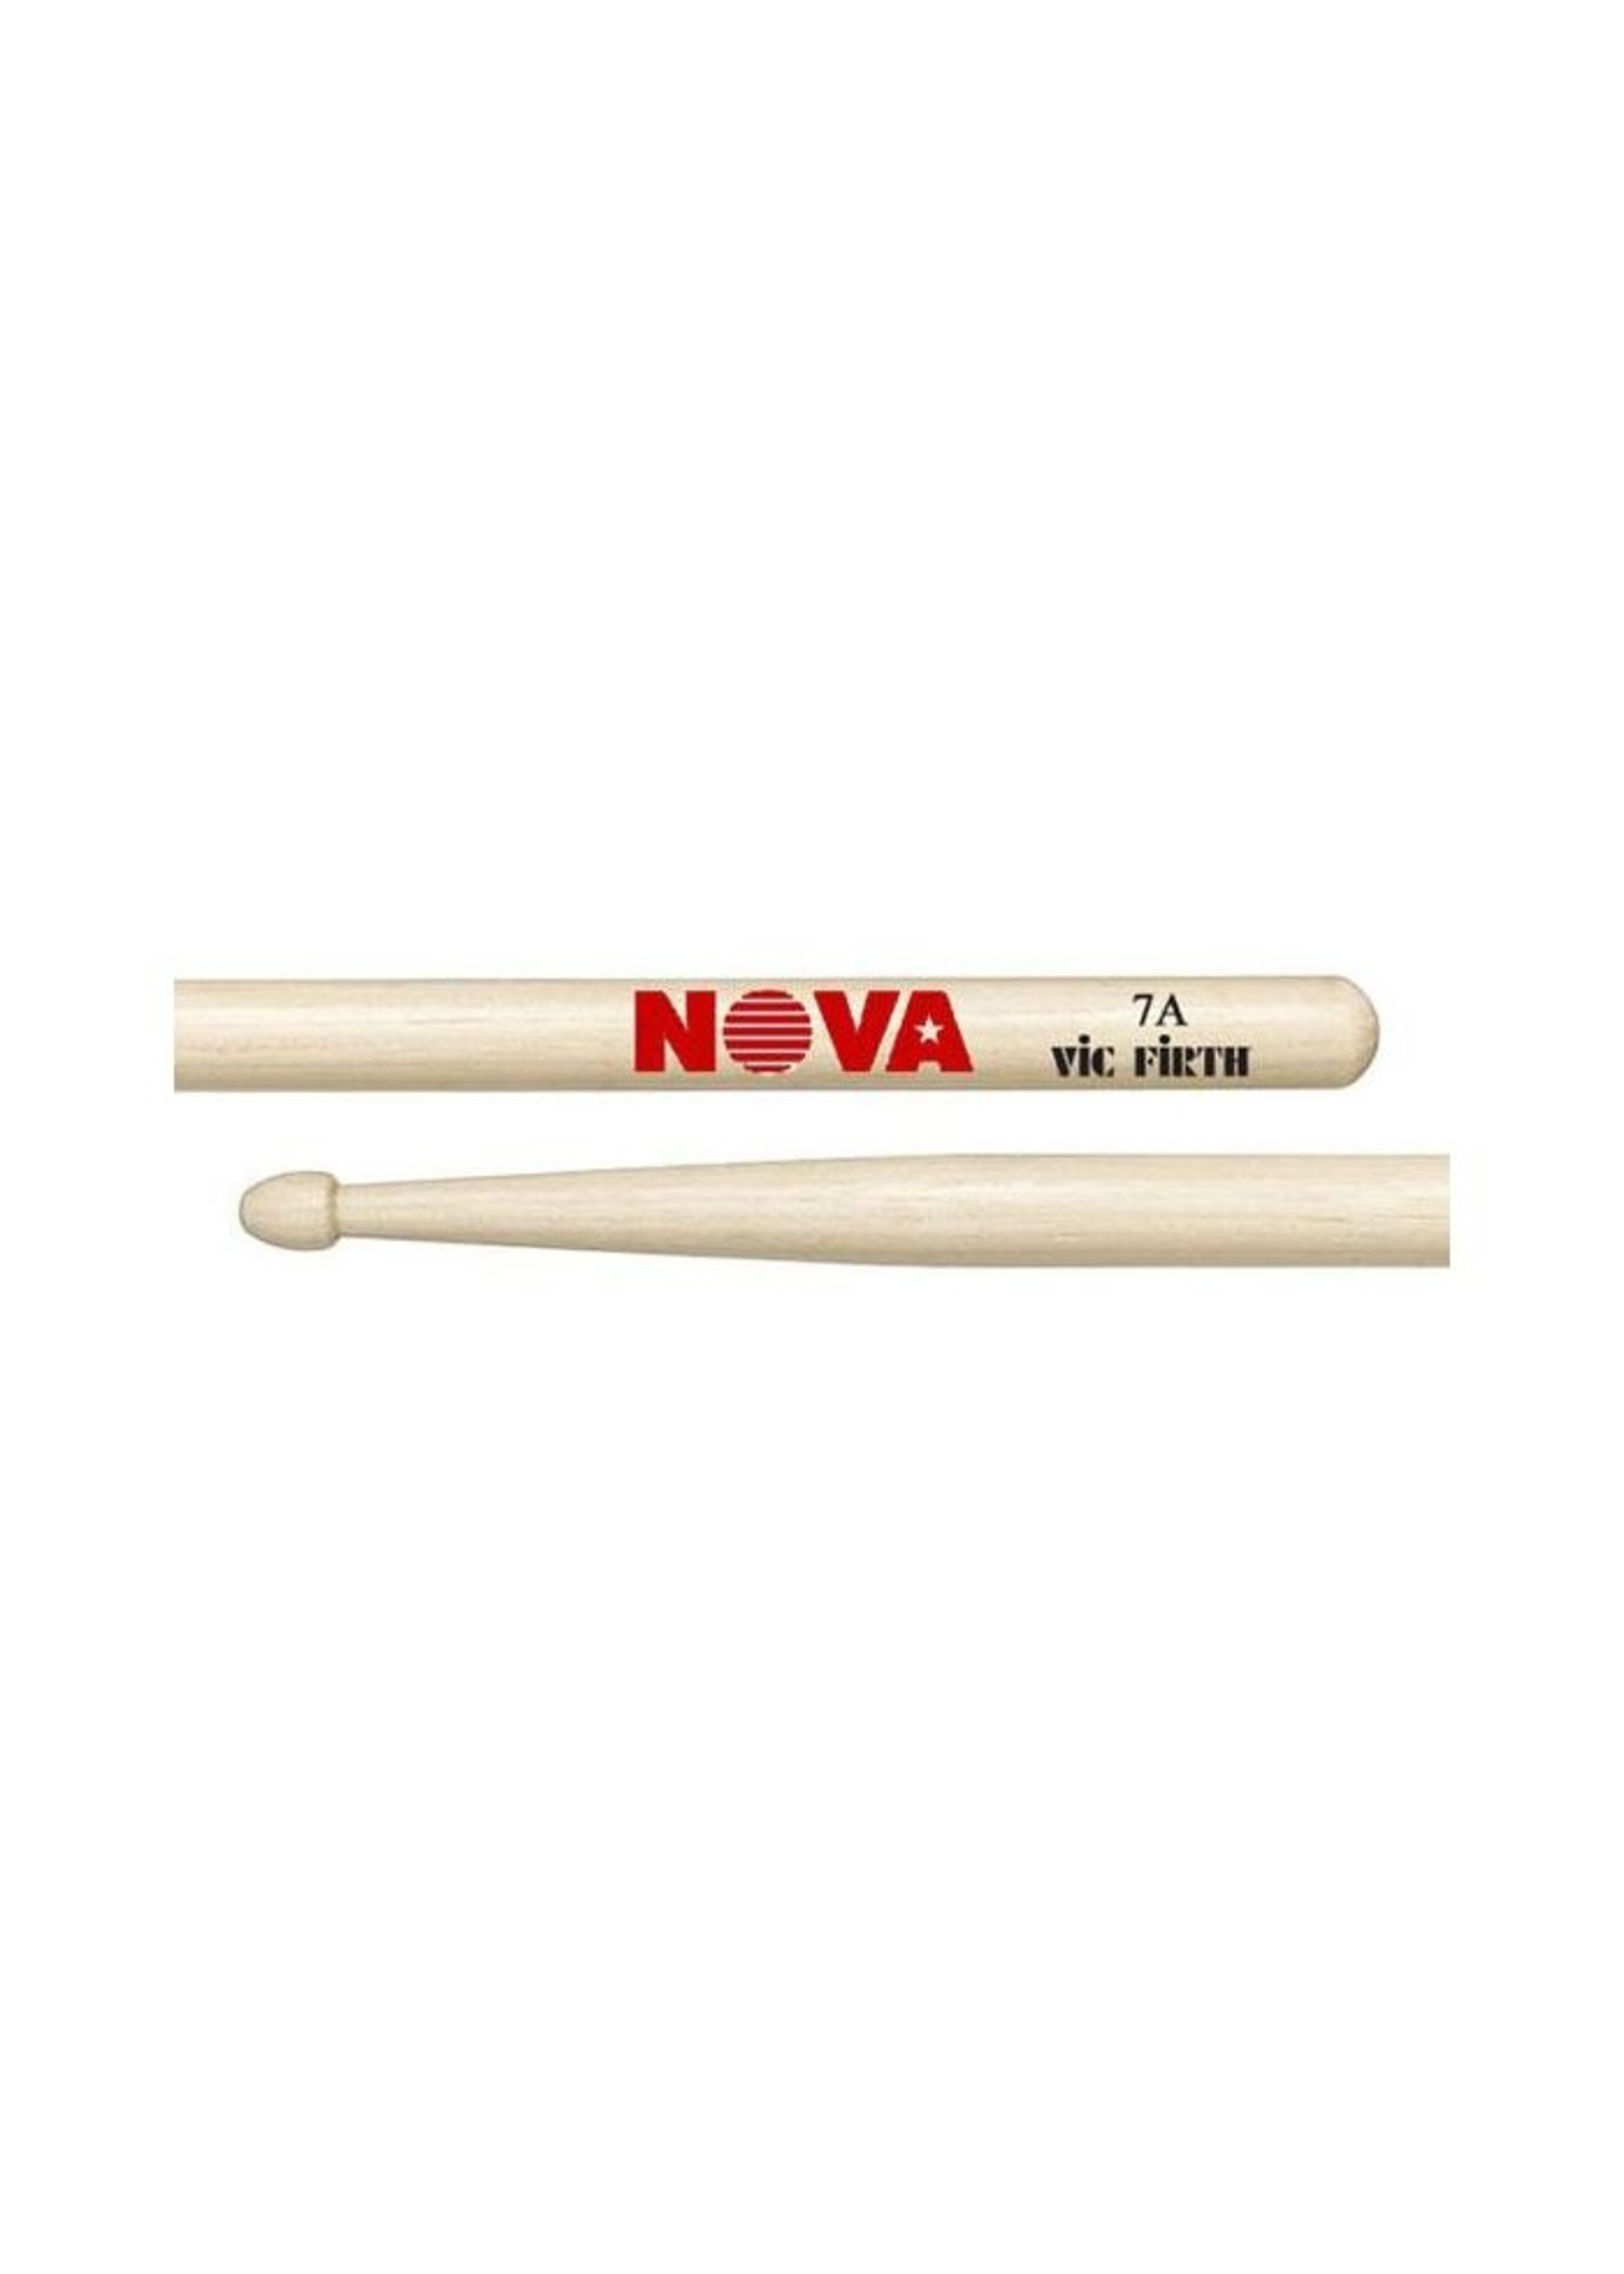 Vic Firth Nova 7A Drum Sticks